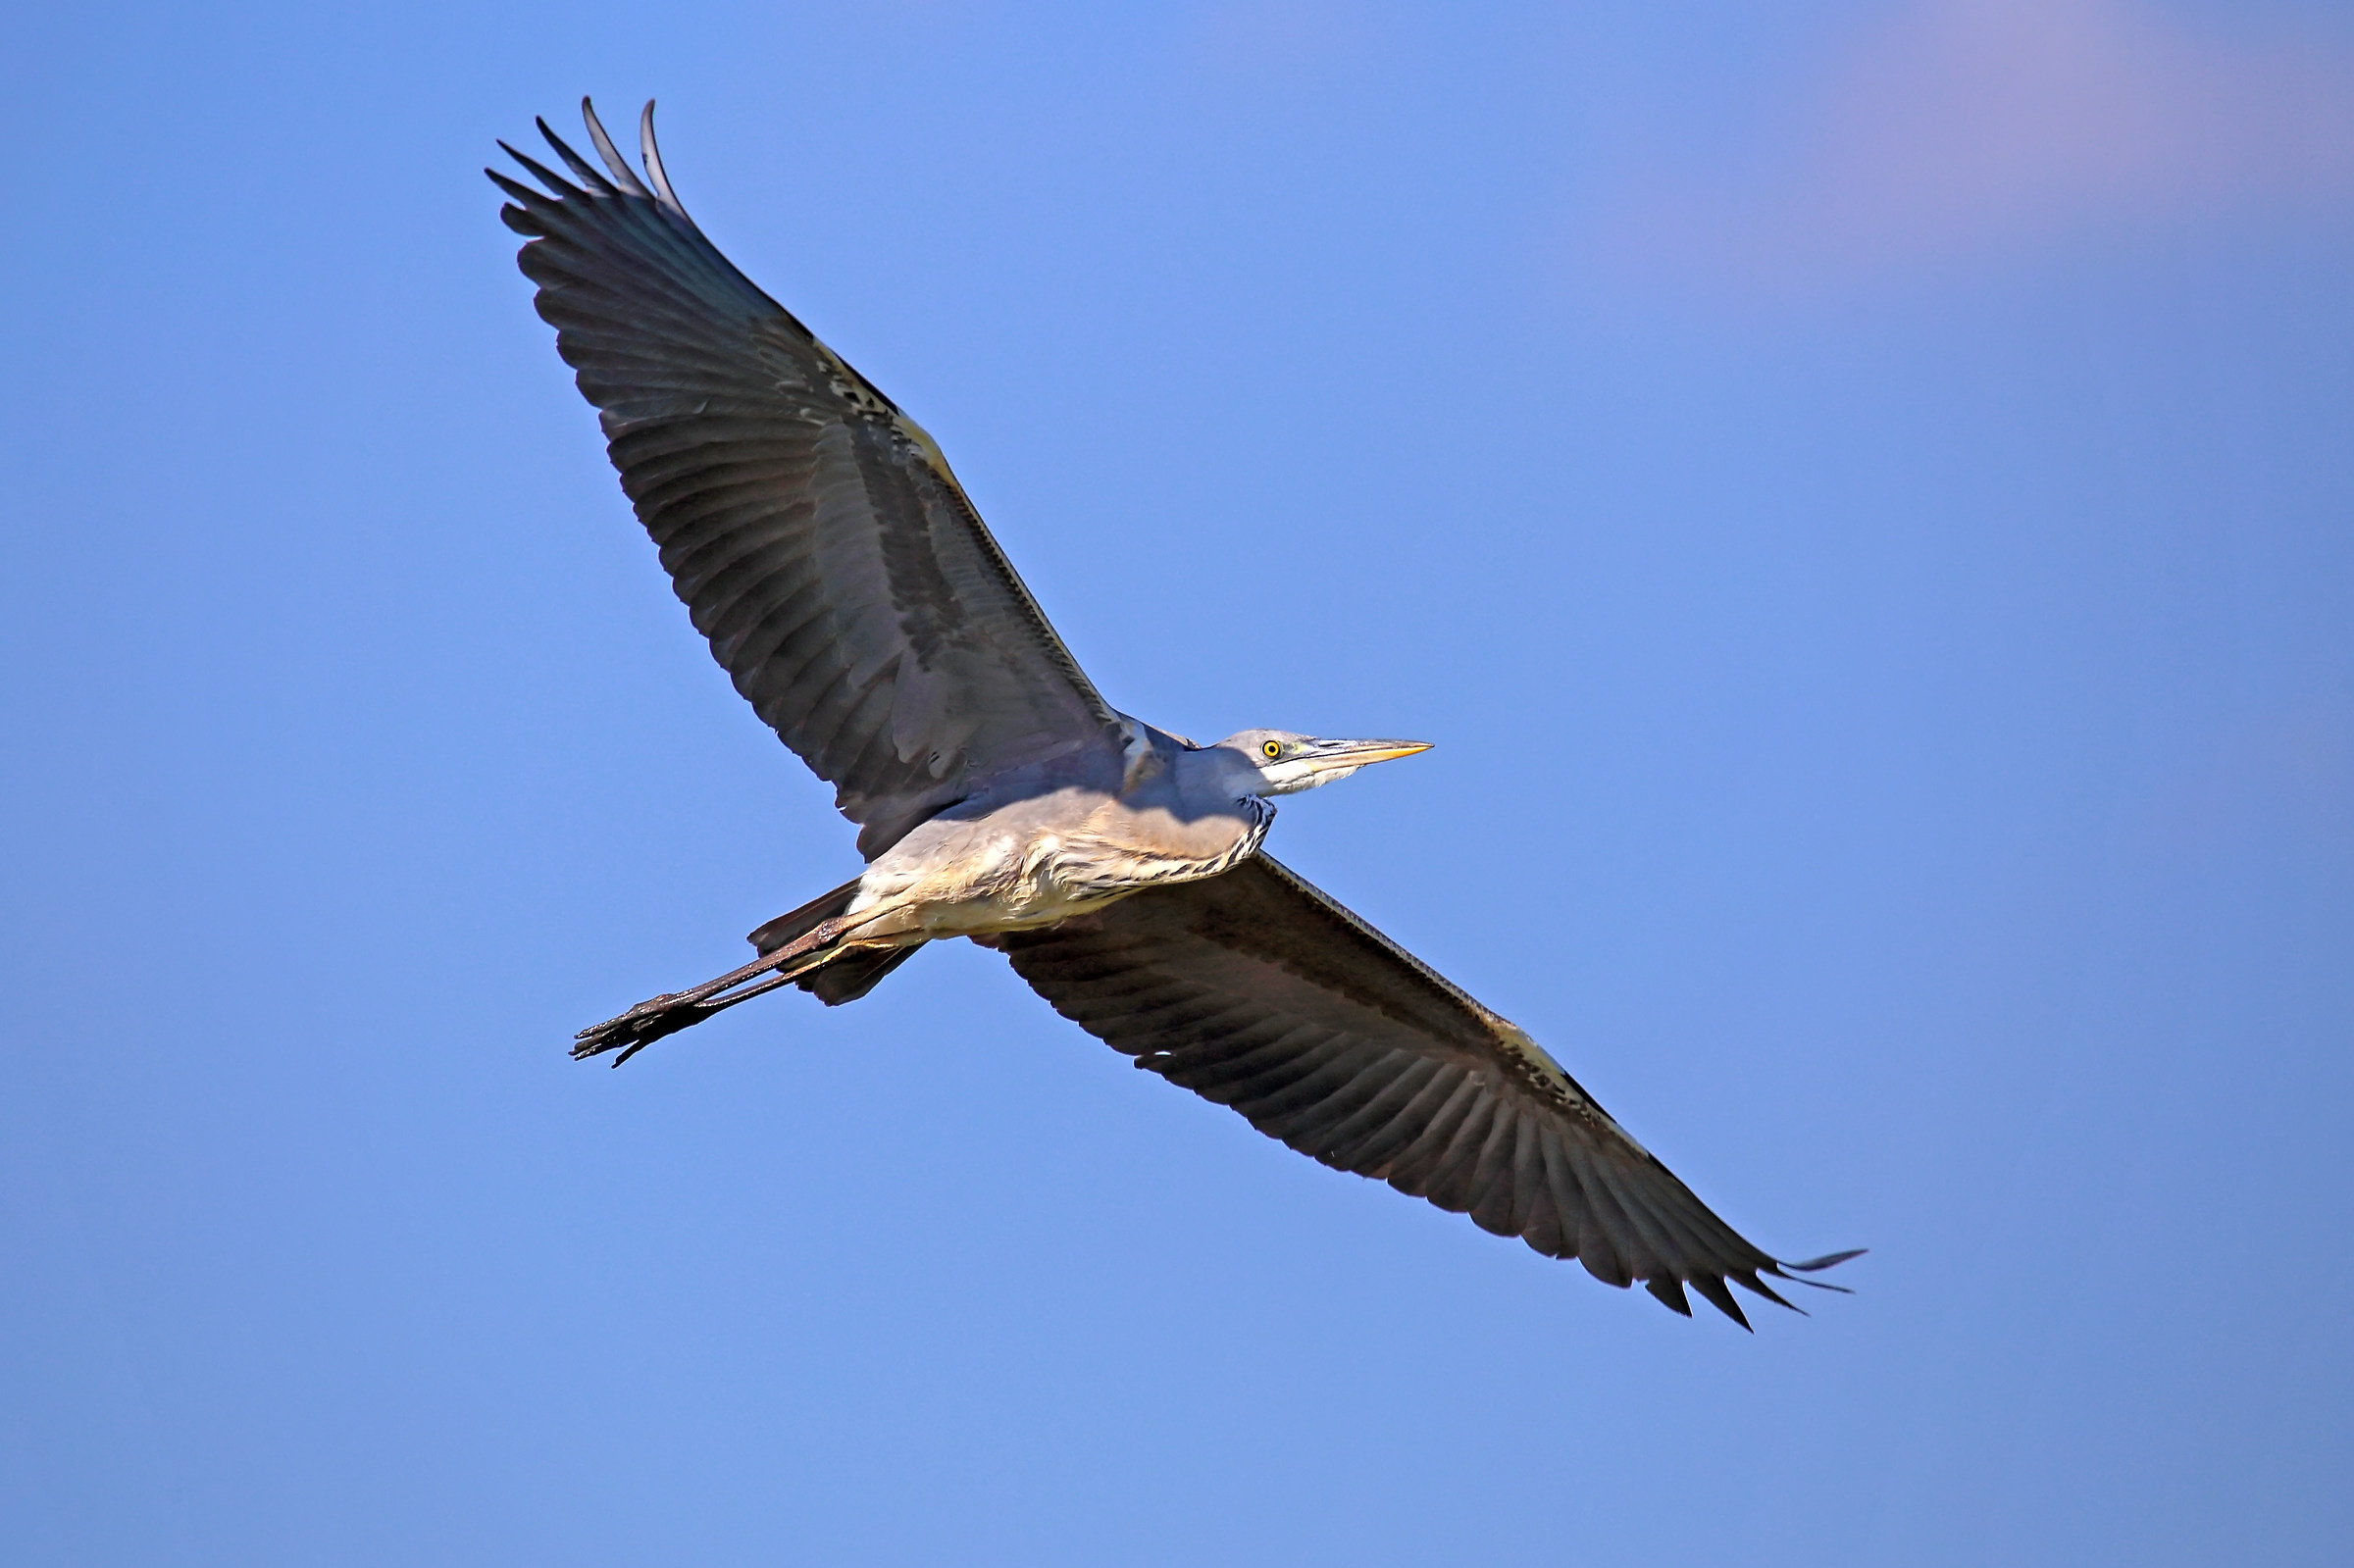 Heron flying in flight...